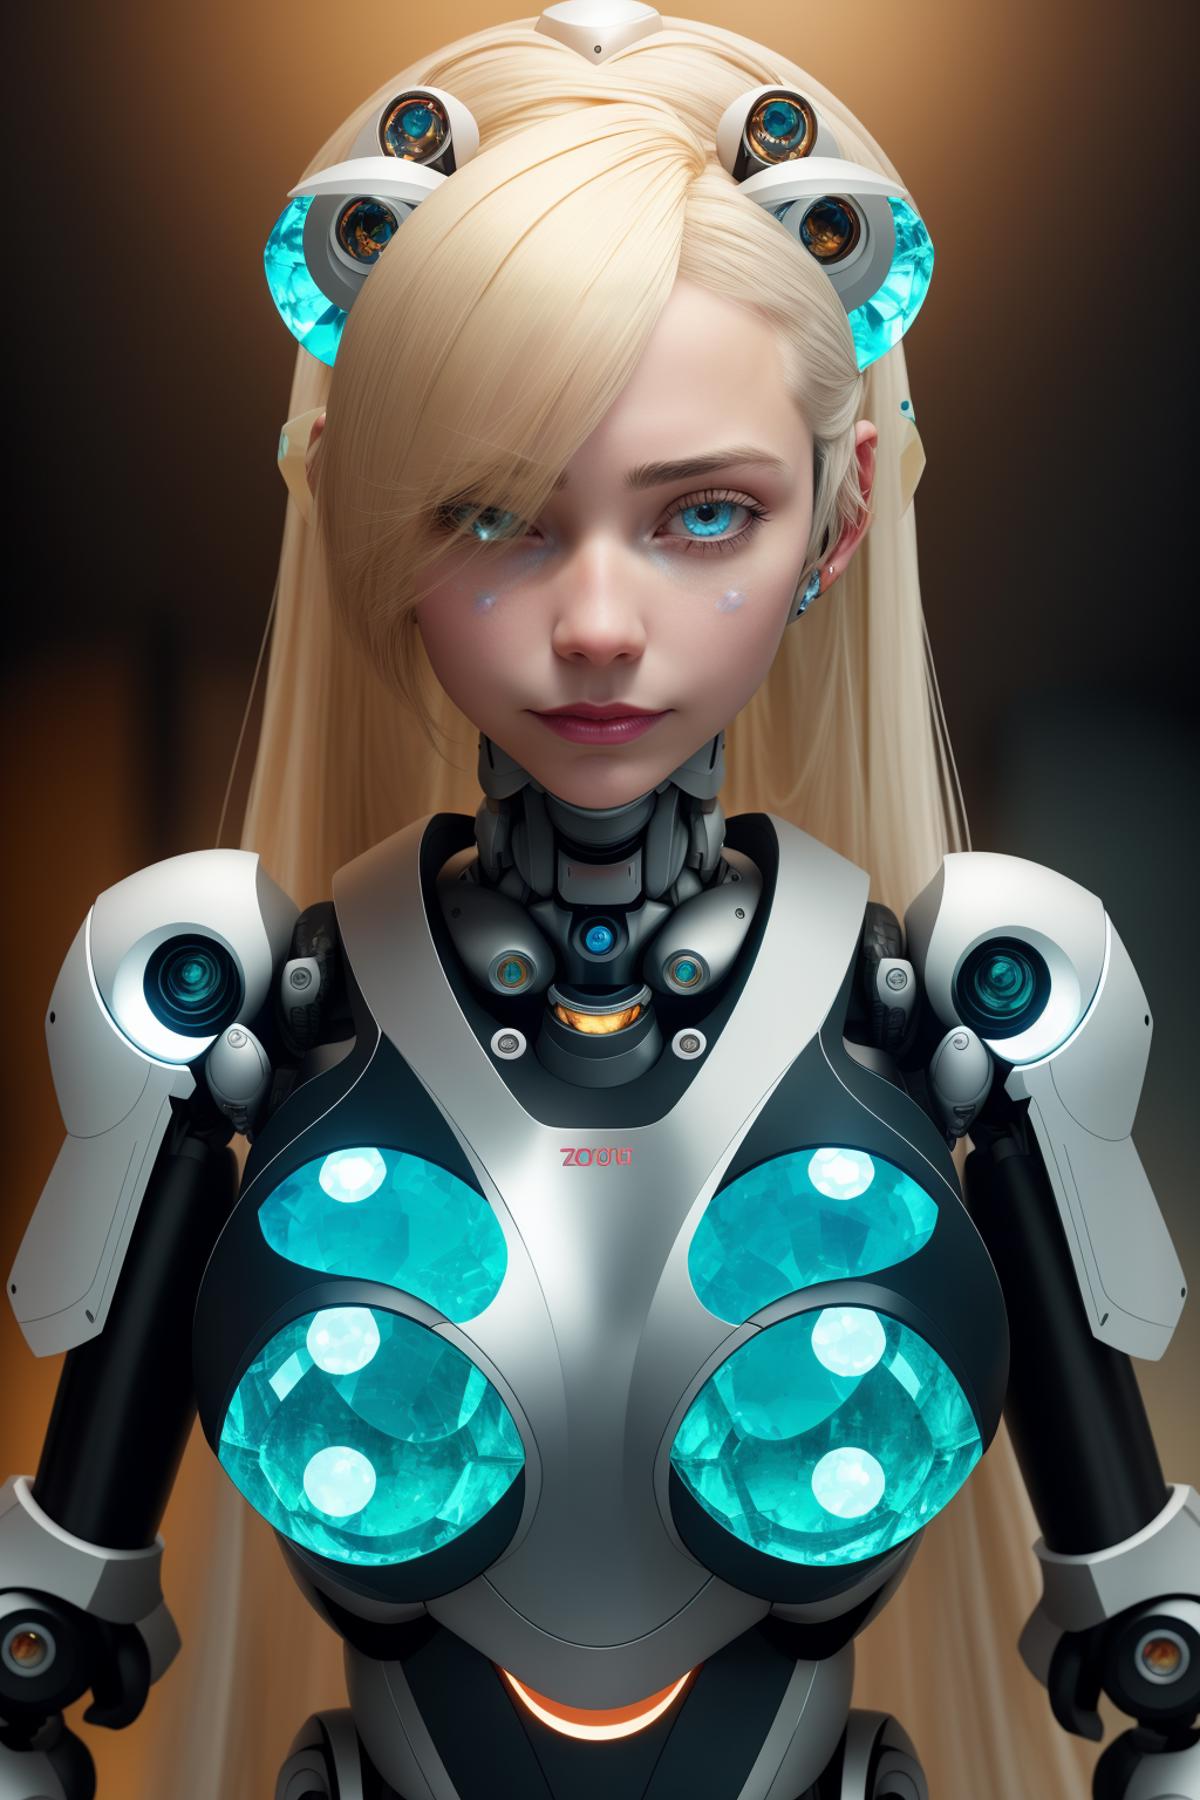 AI model image by frtzngbllrai